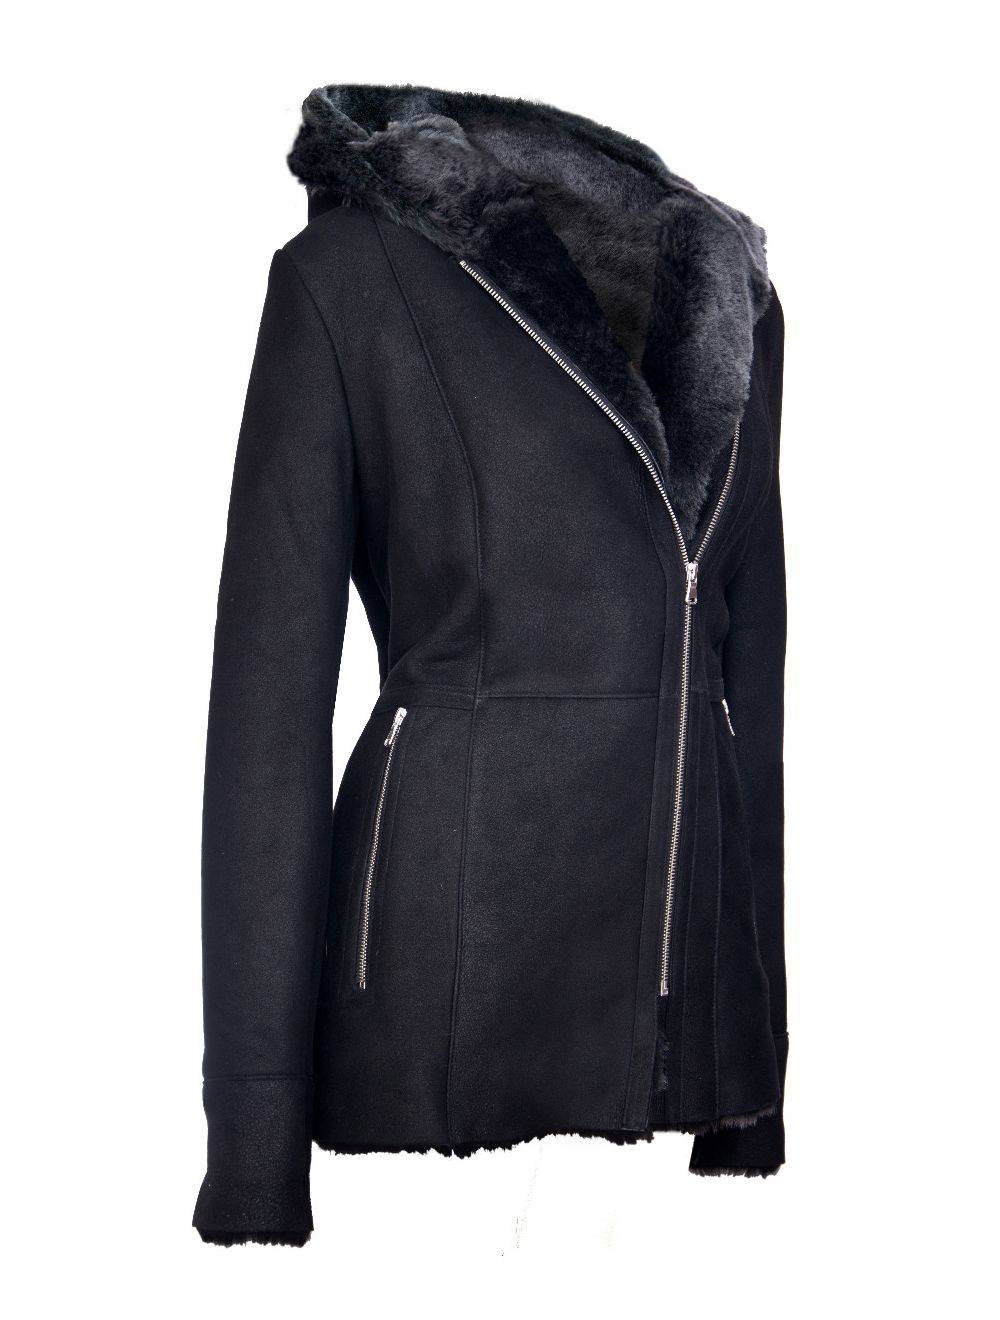 Ladies Black Hooded Merino Sheepskin Jacket for sale - Woodcock and Cavendish